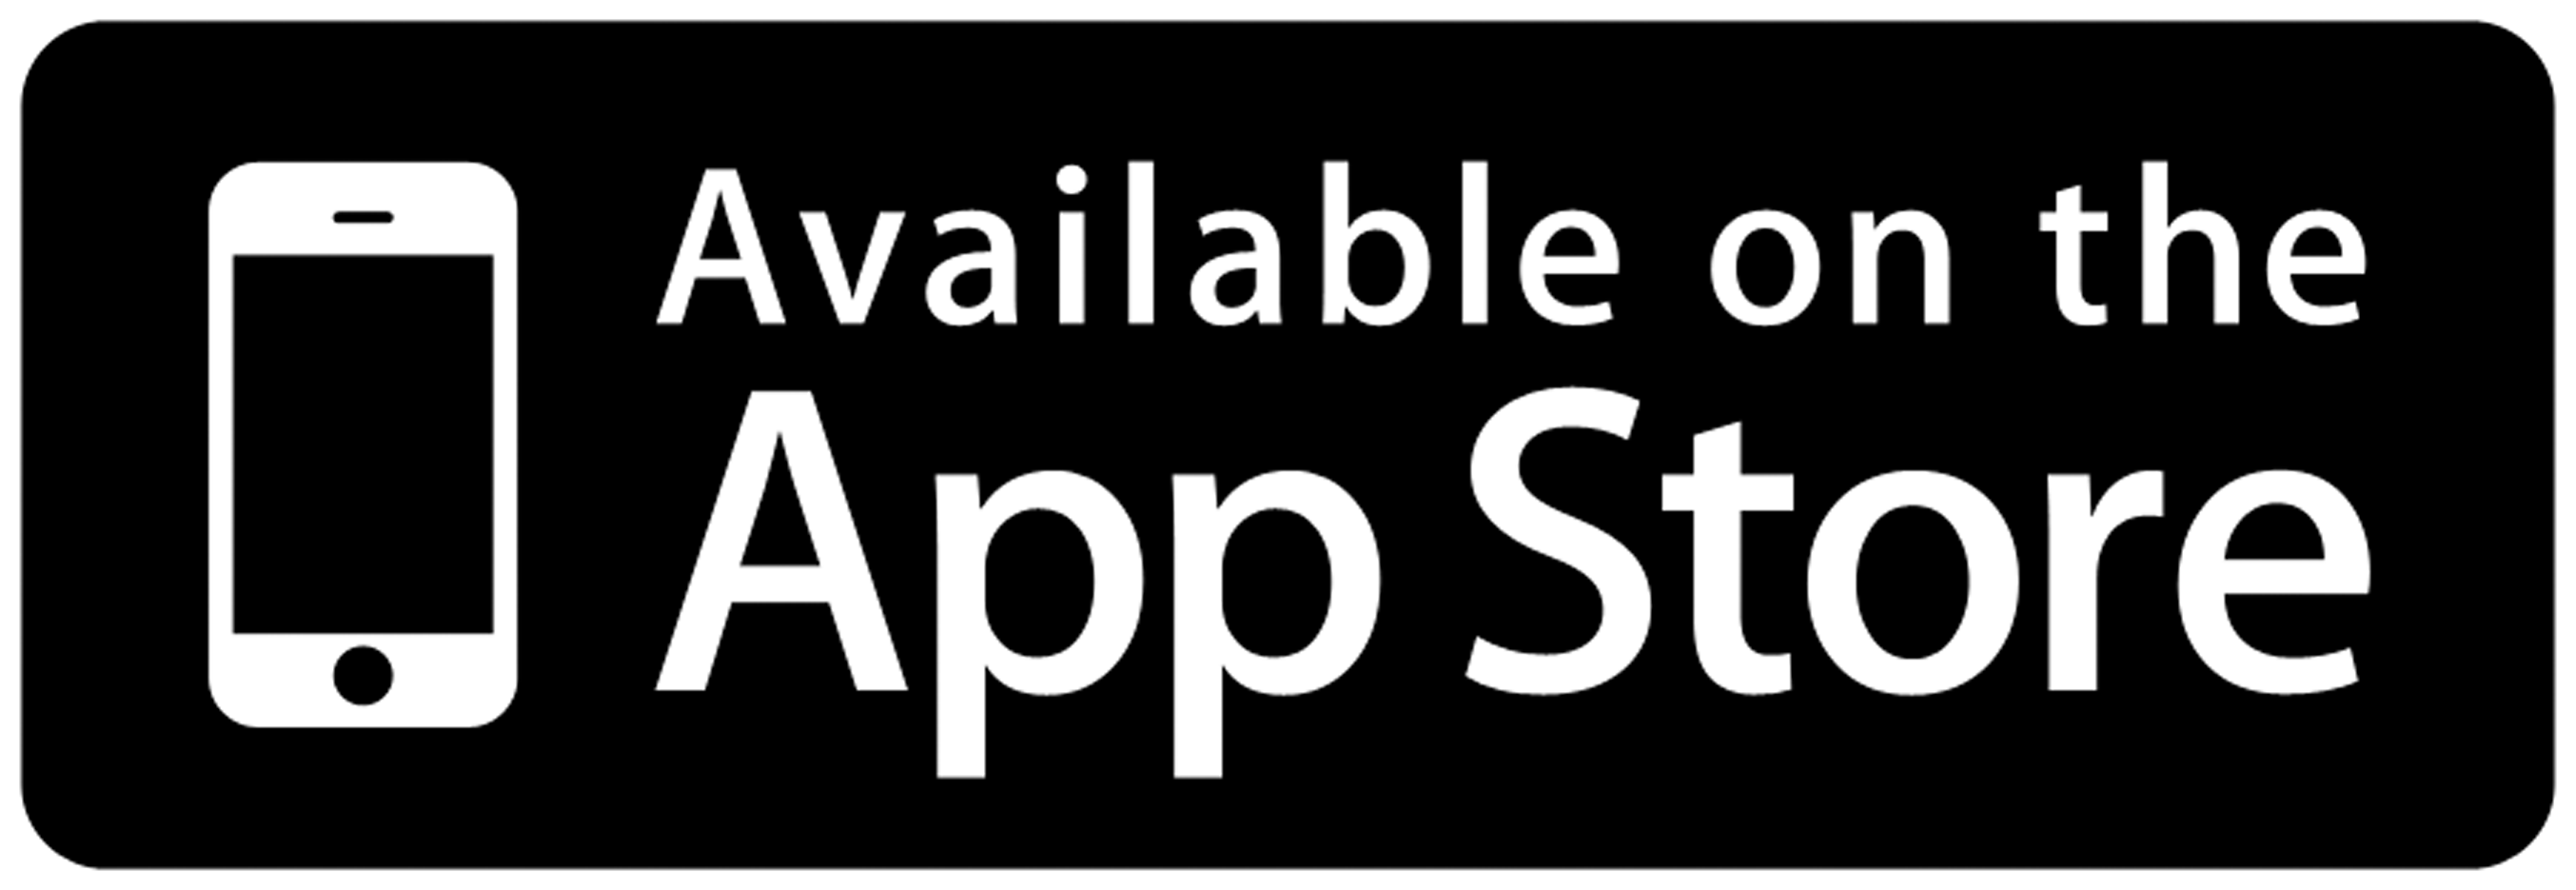 APPSTORE иконка. Apple Store значок. App Store приложения. Доступно в app Store. Установить ап стор